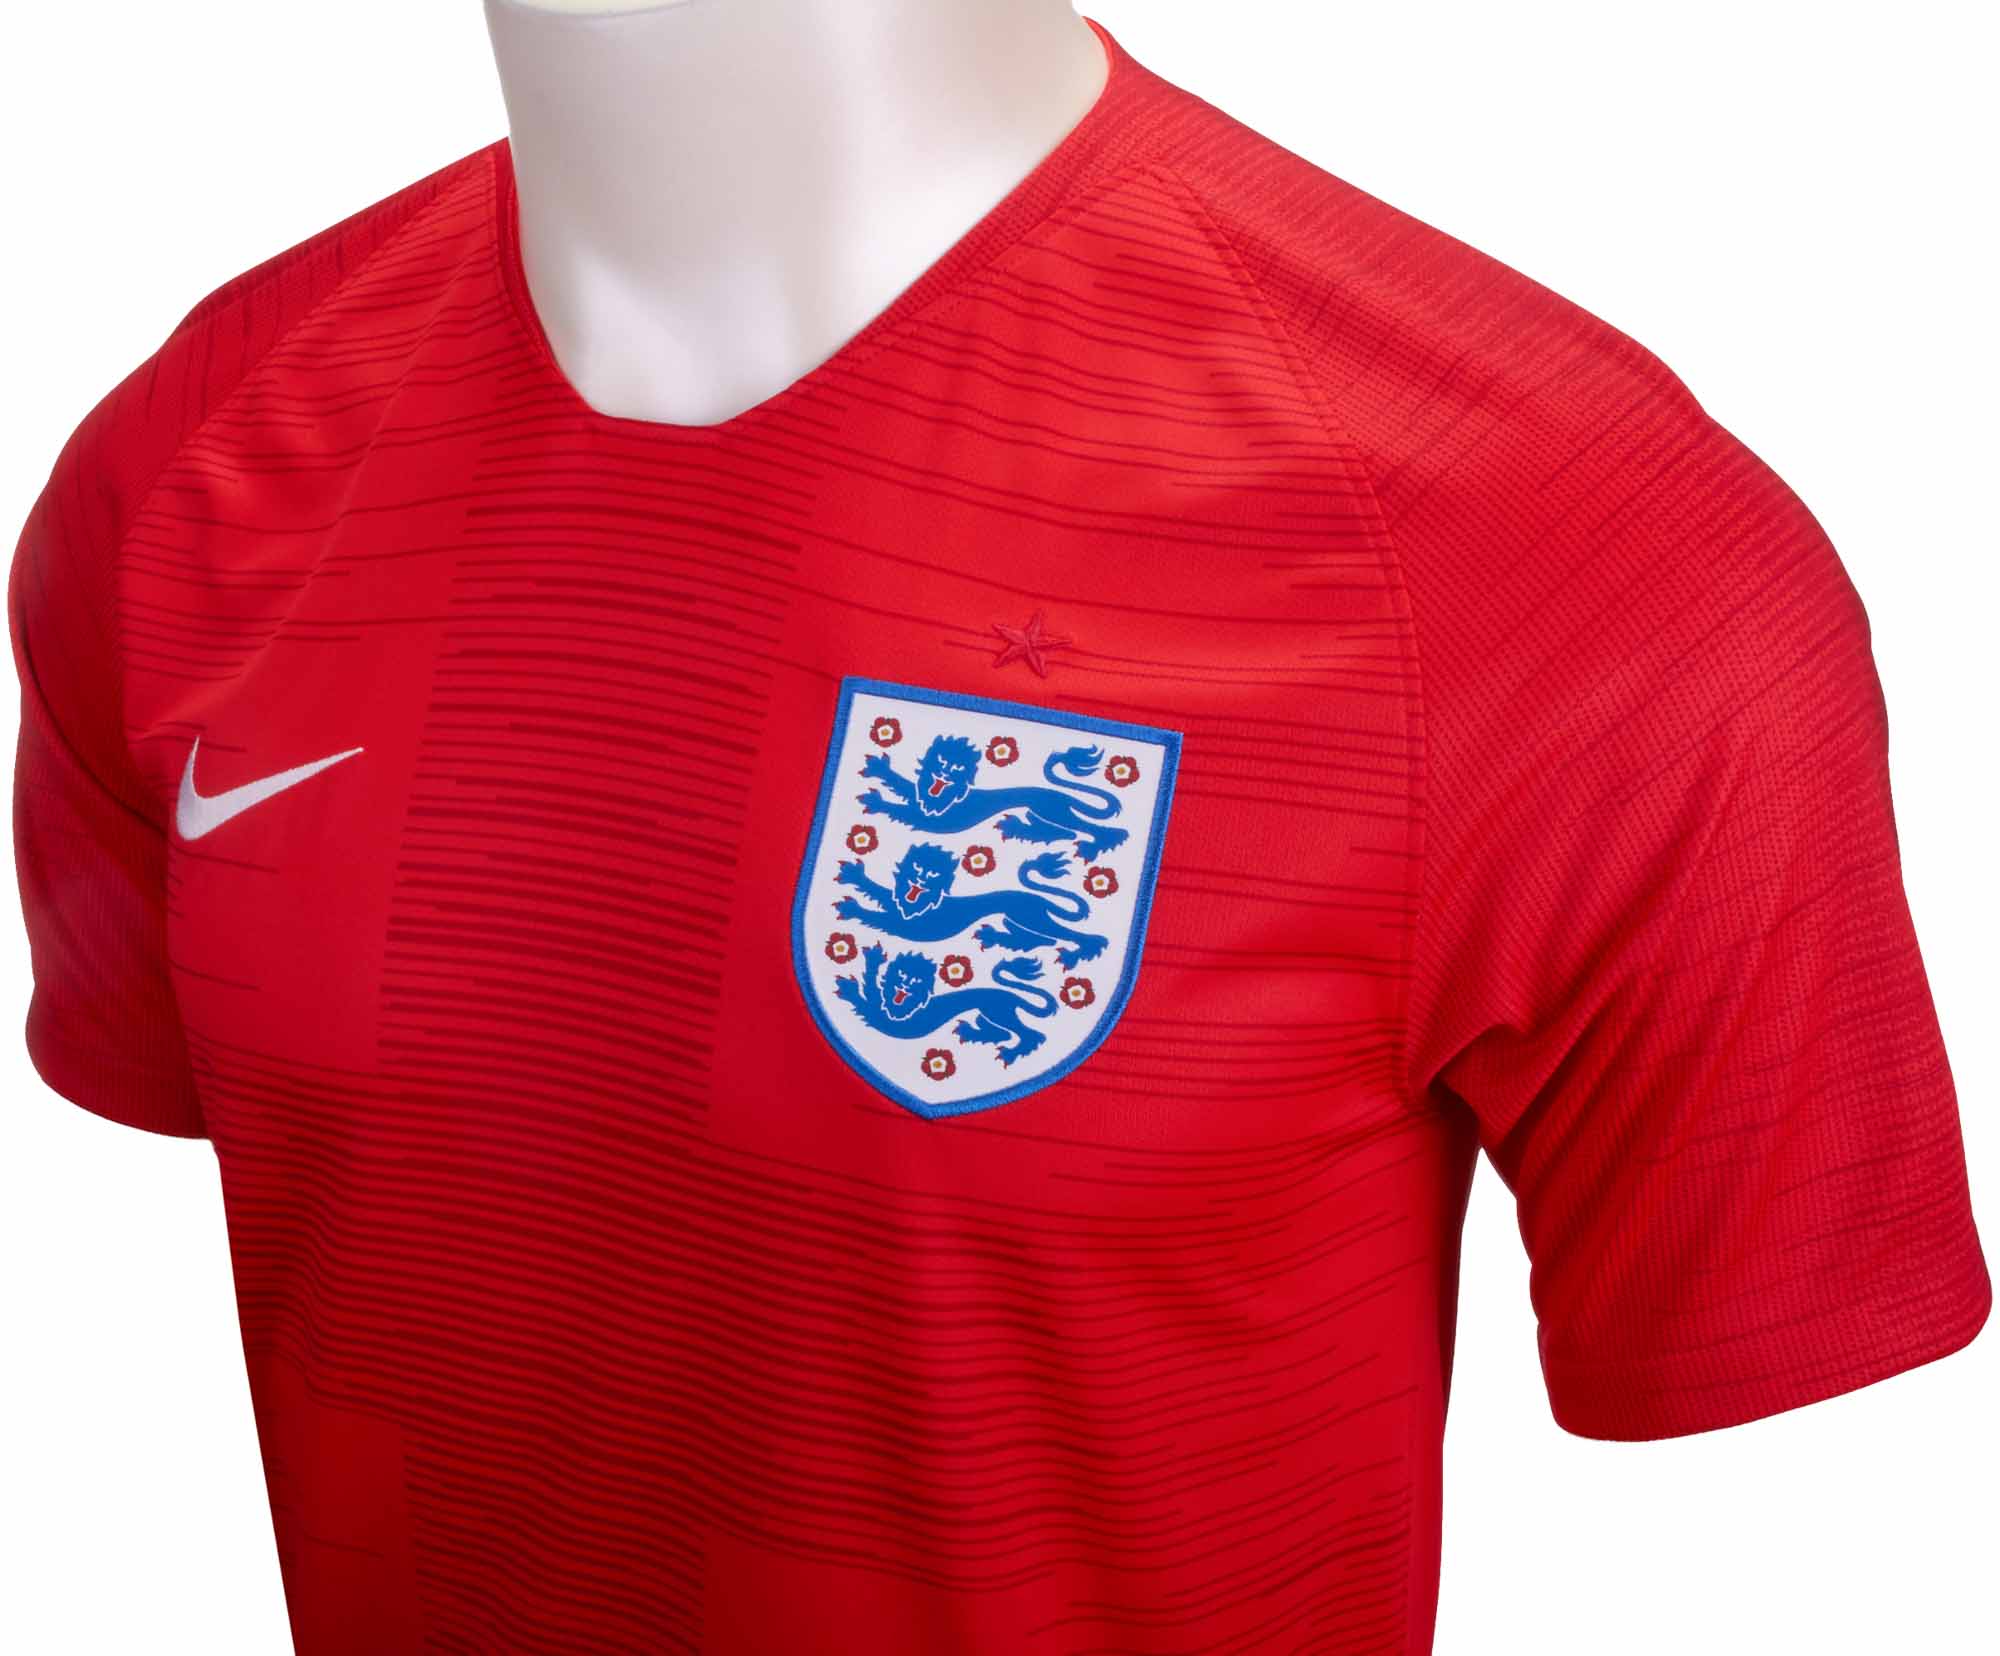 england new away kit 2018